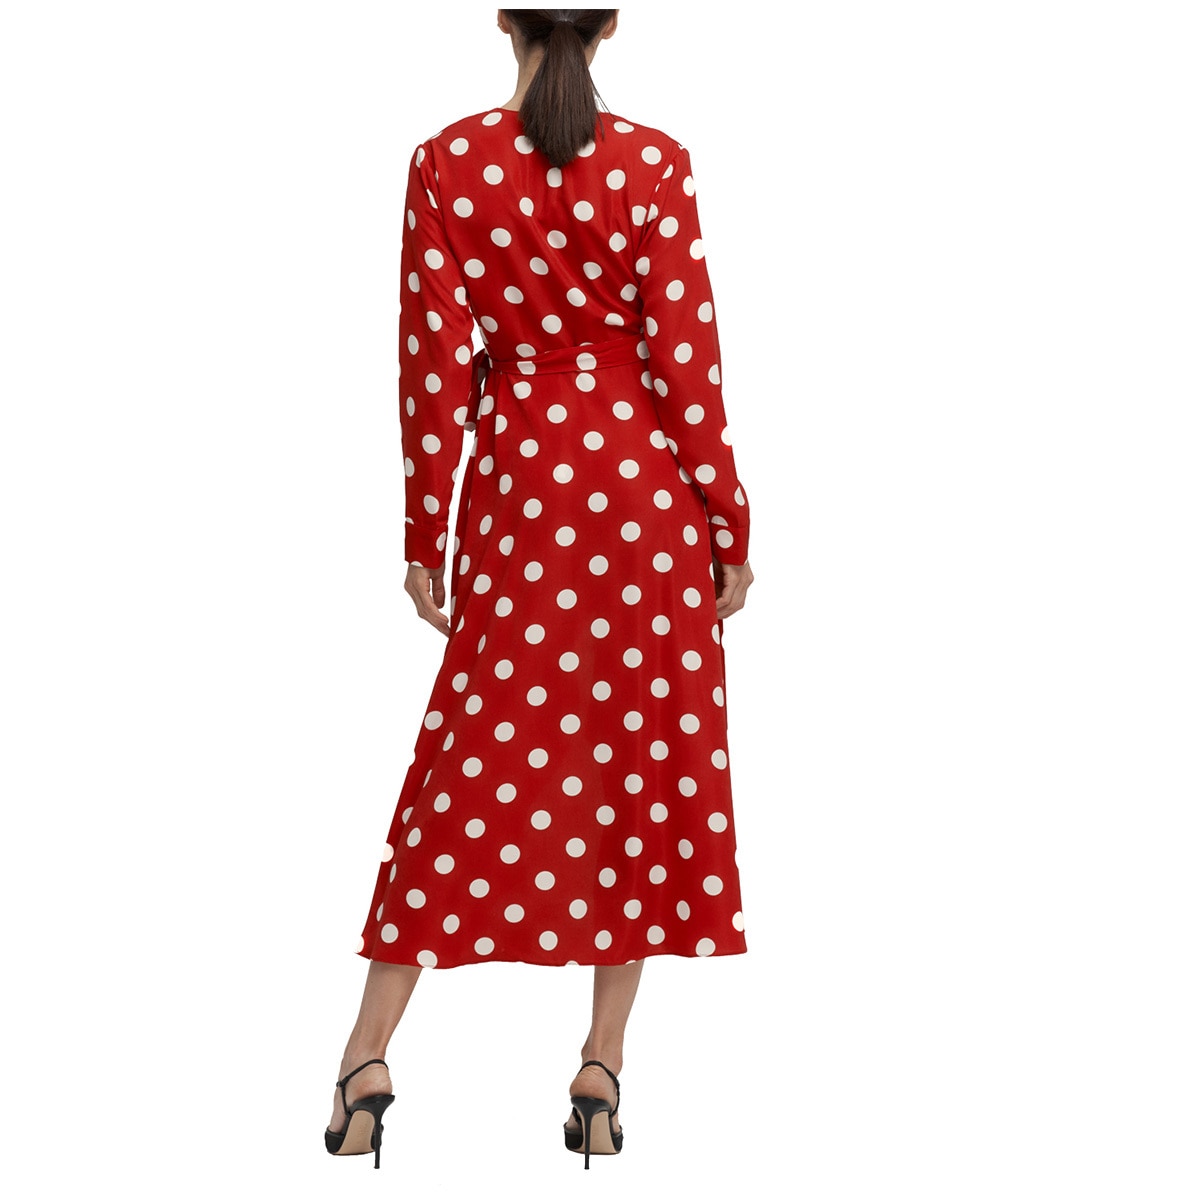 Cooper St Women's Wrap Dress - Red/White